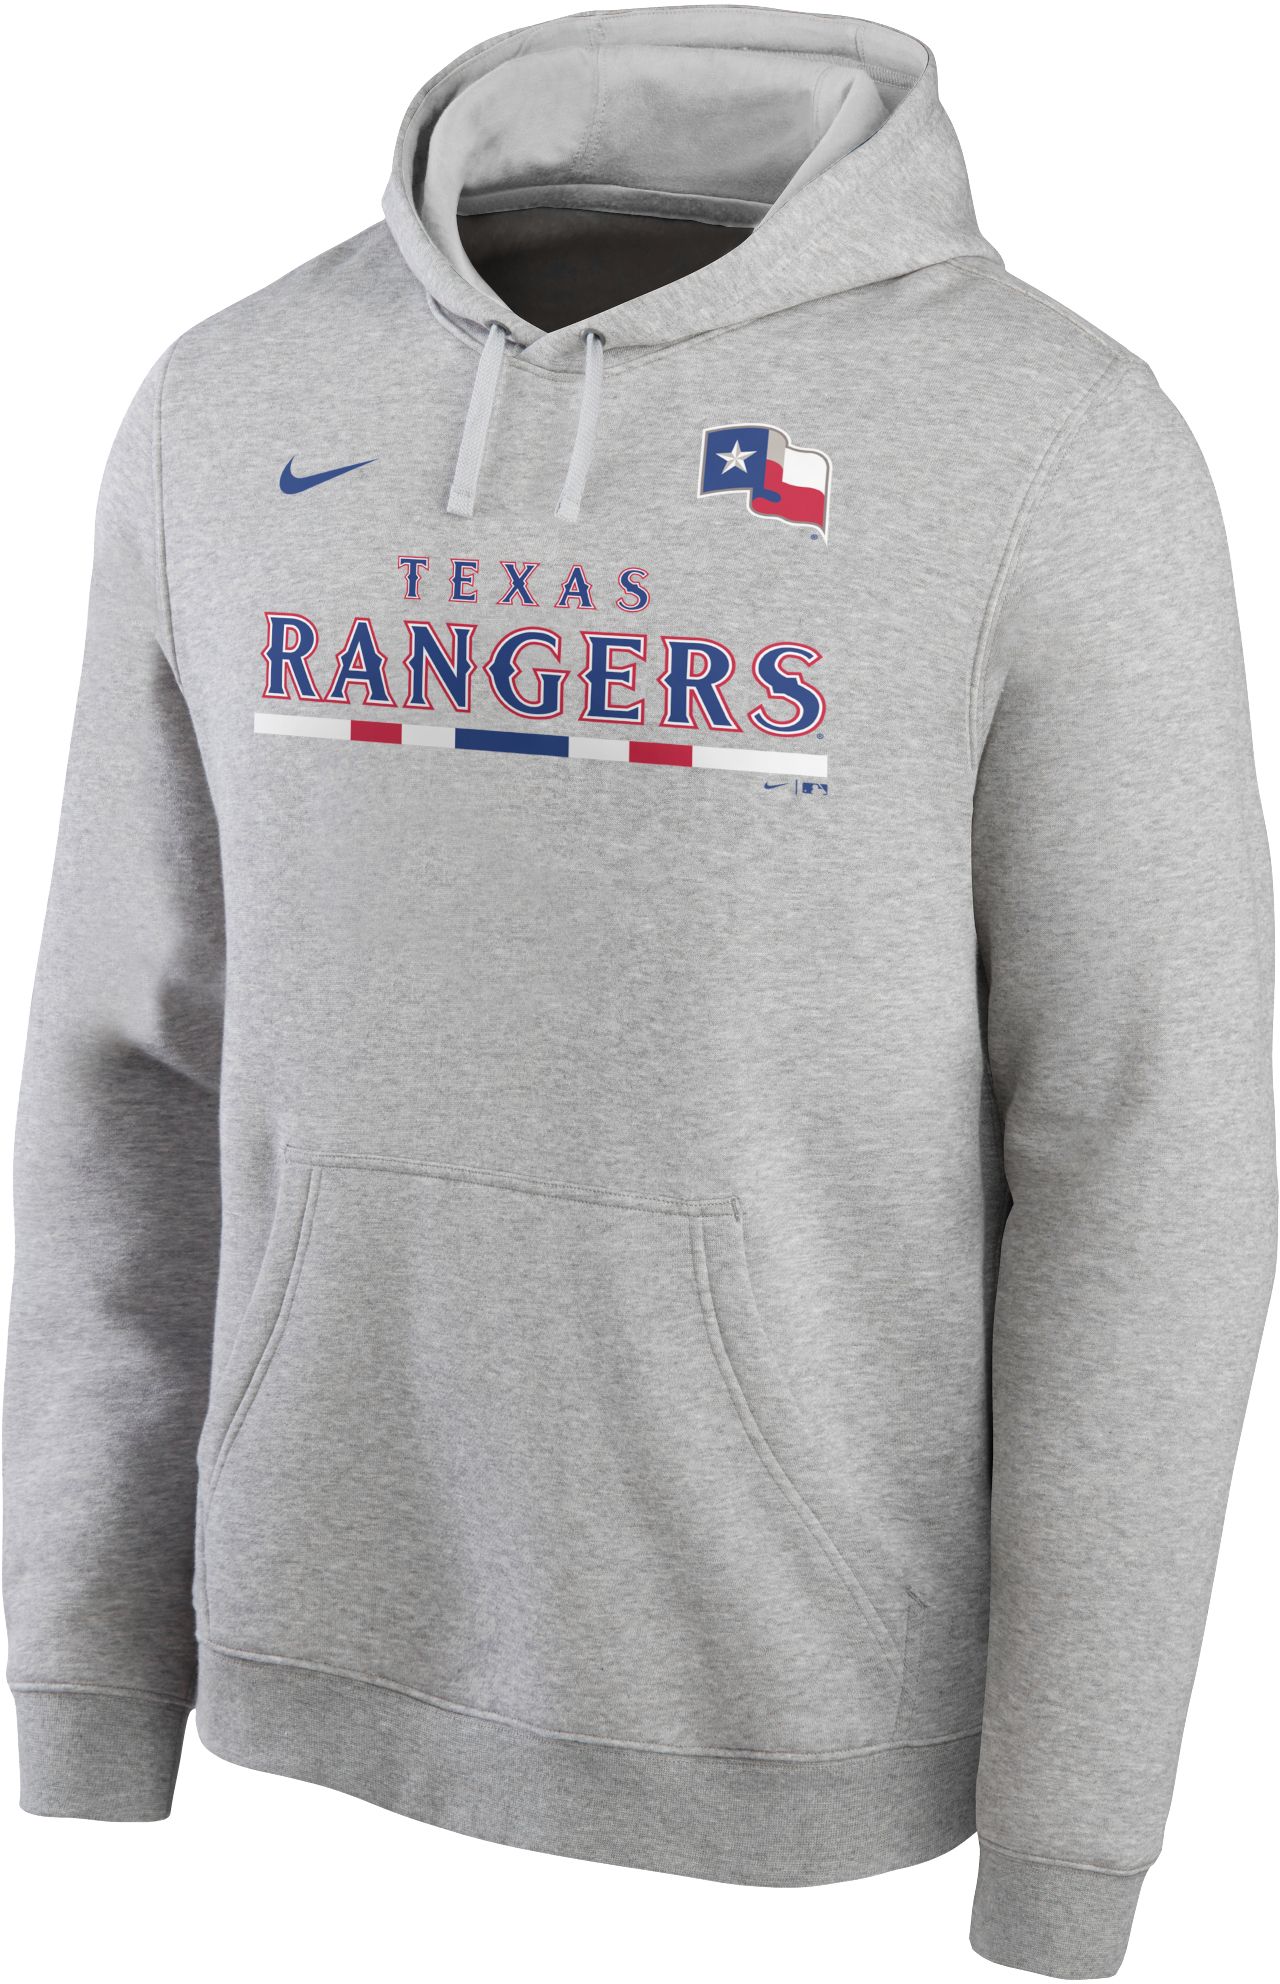 texas rangers sweatshirt